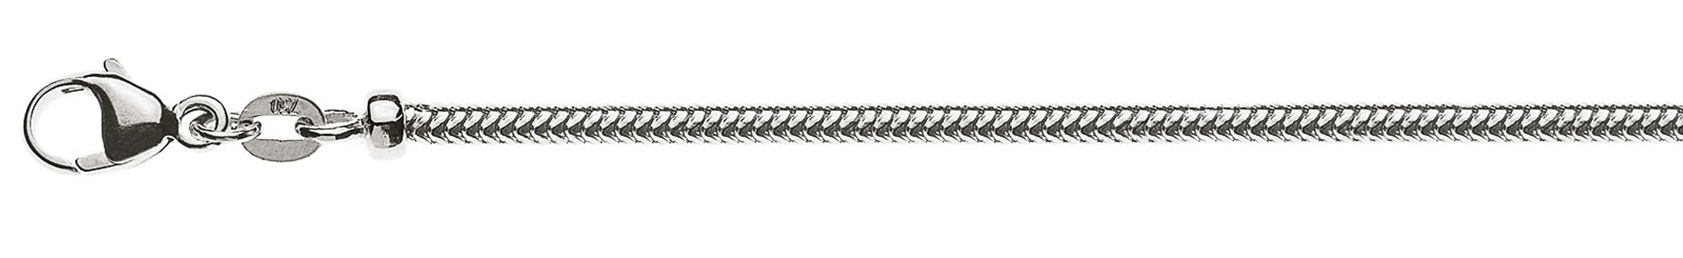 AURONOS Prestige Necklace white gold 18K snake chain 40cm 2.4mm